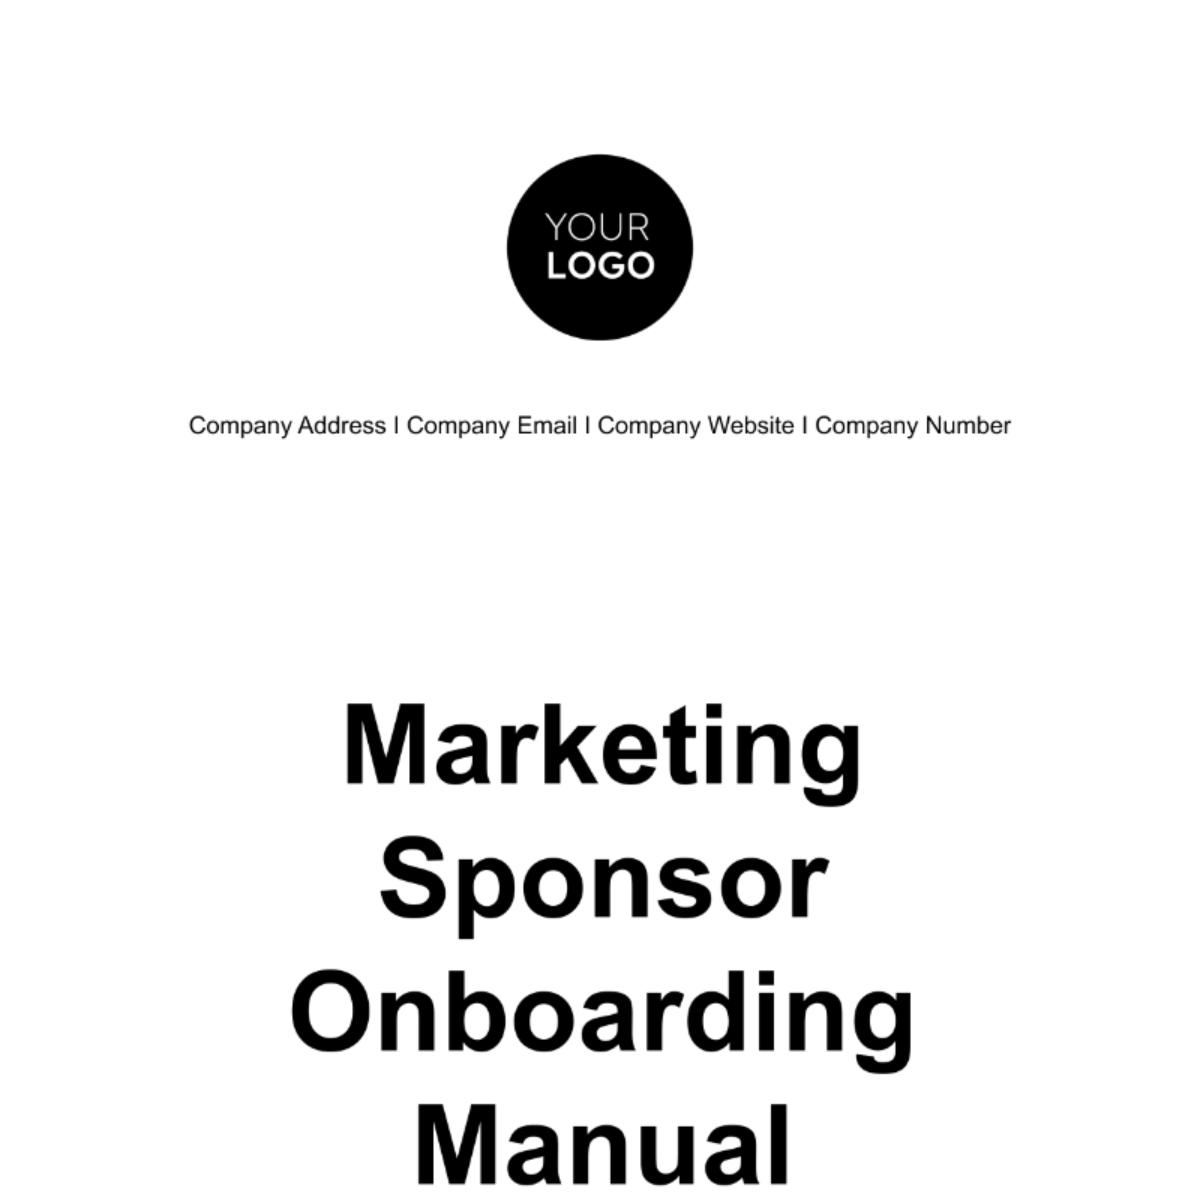 Marketing Sponsor Onboarding Manual Template